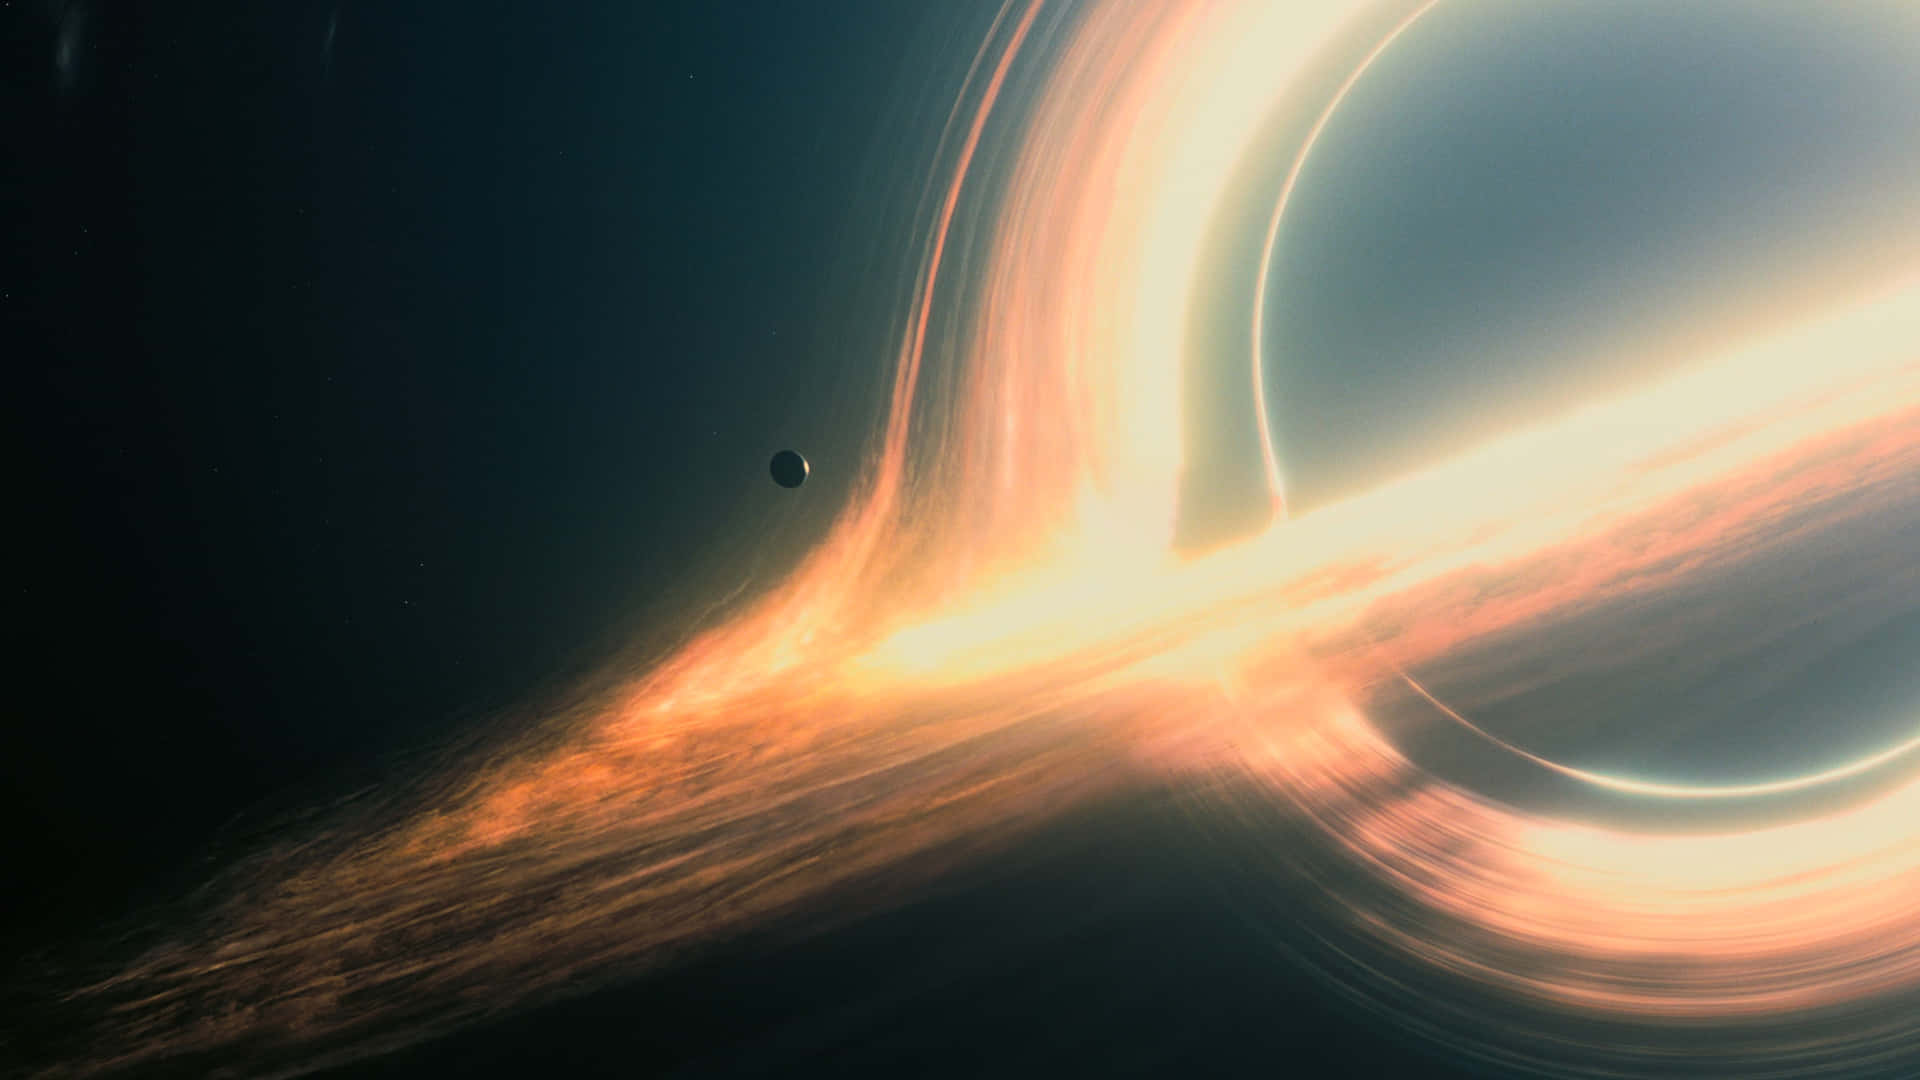 1440p Space Interstellar Film 2014 Wallpaper